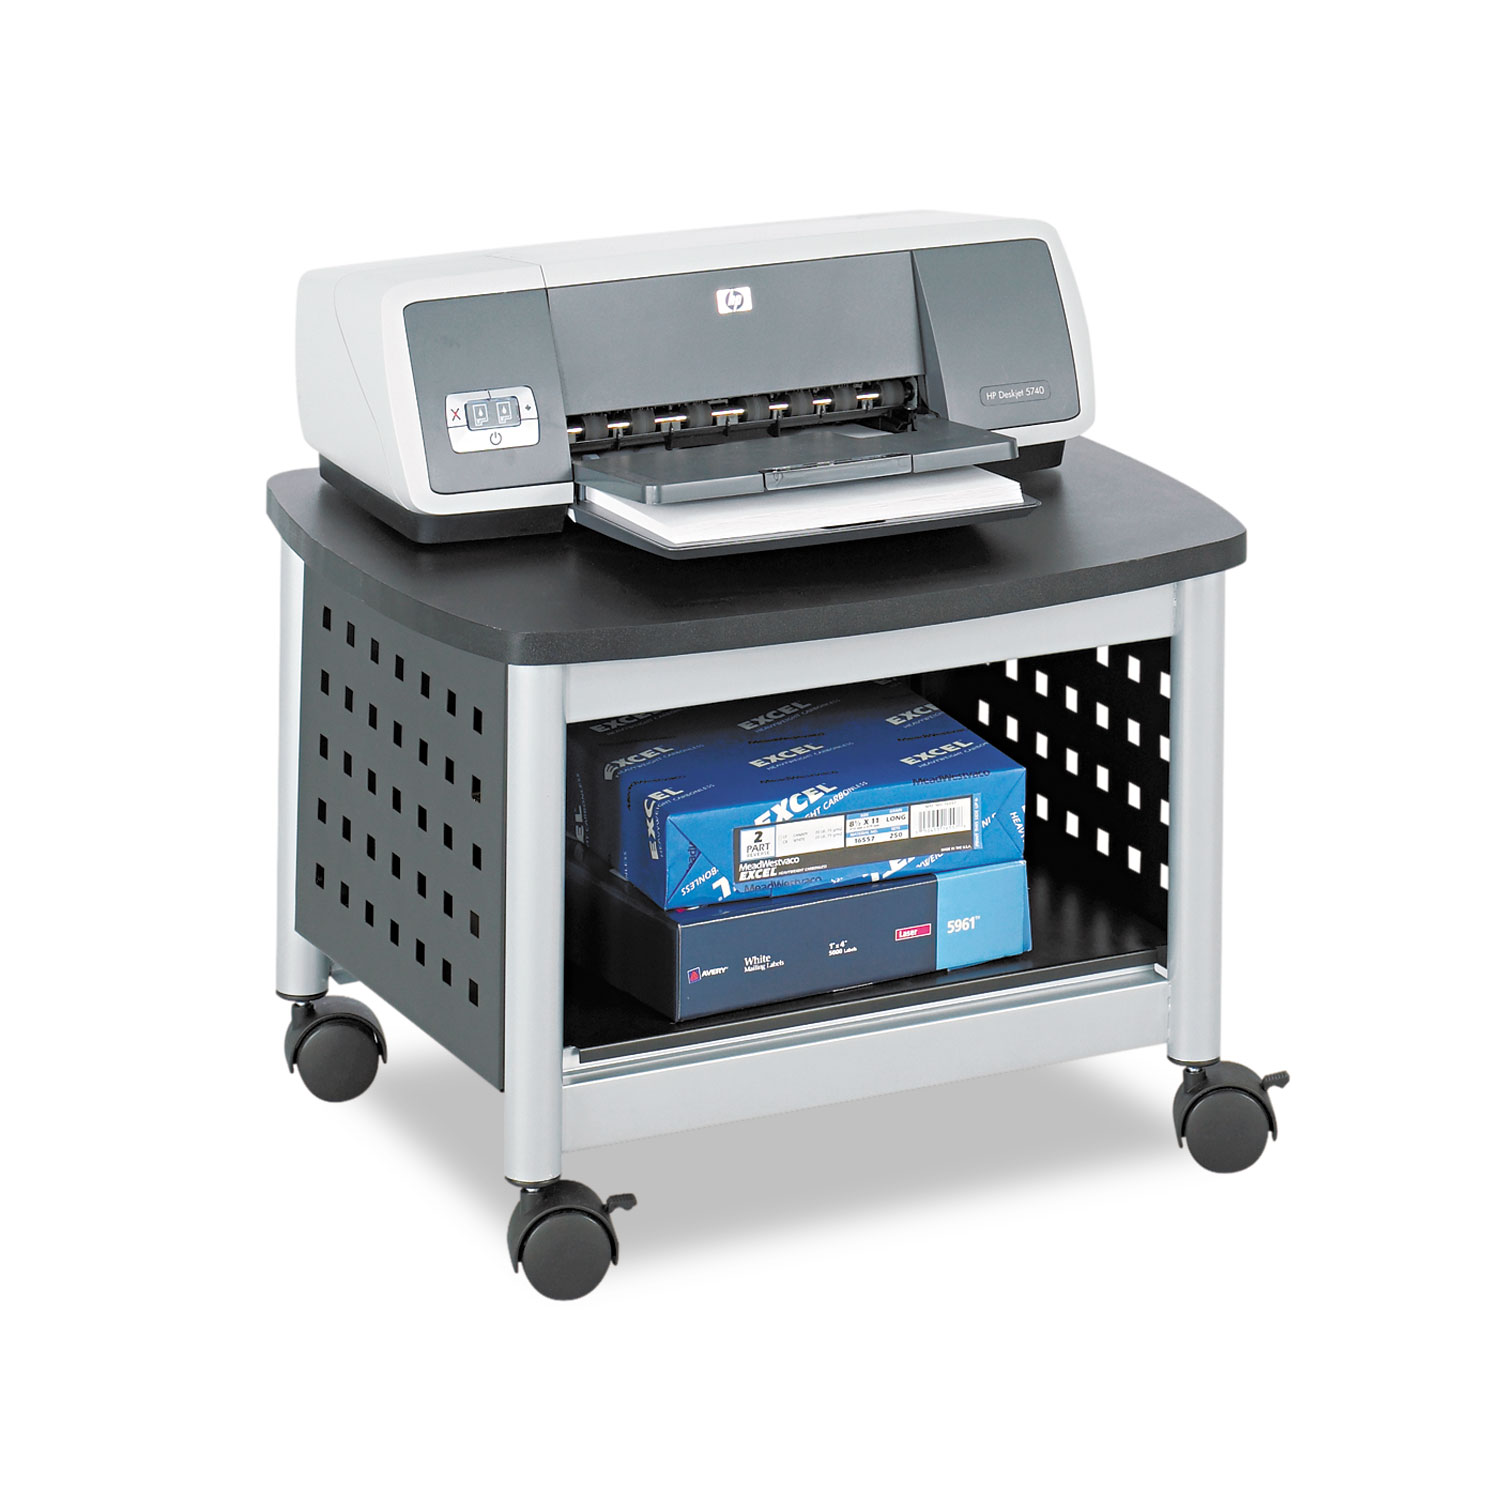  Safco 1855BL Scoot Printer Stand, 20.25w x 16.5d x 14.5h, Black/Silver (SAF1855BL) 